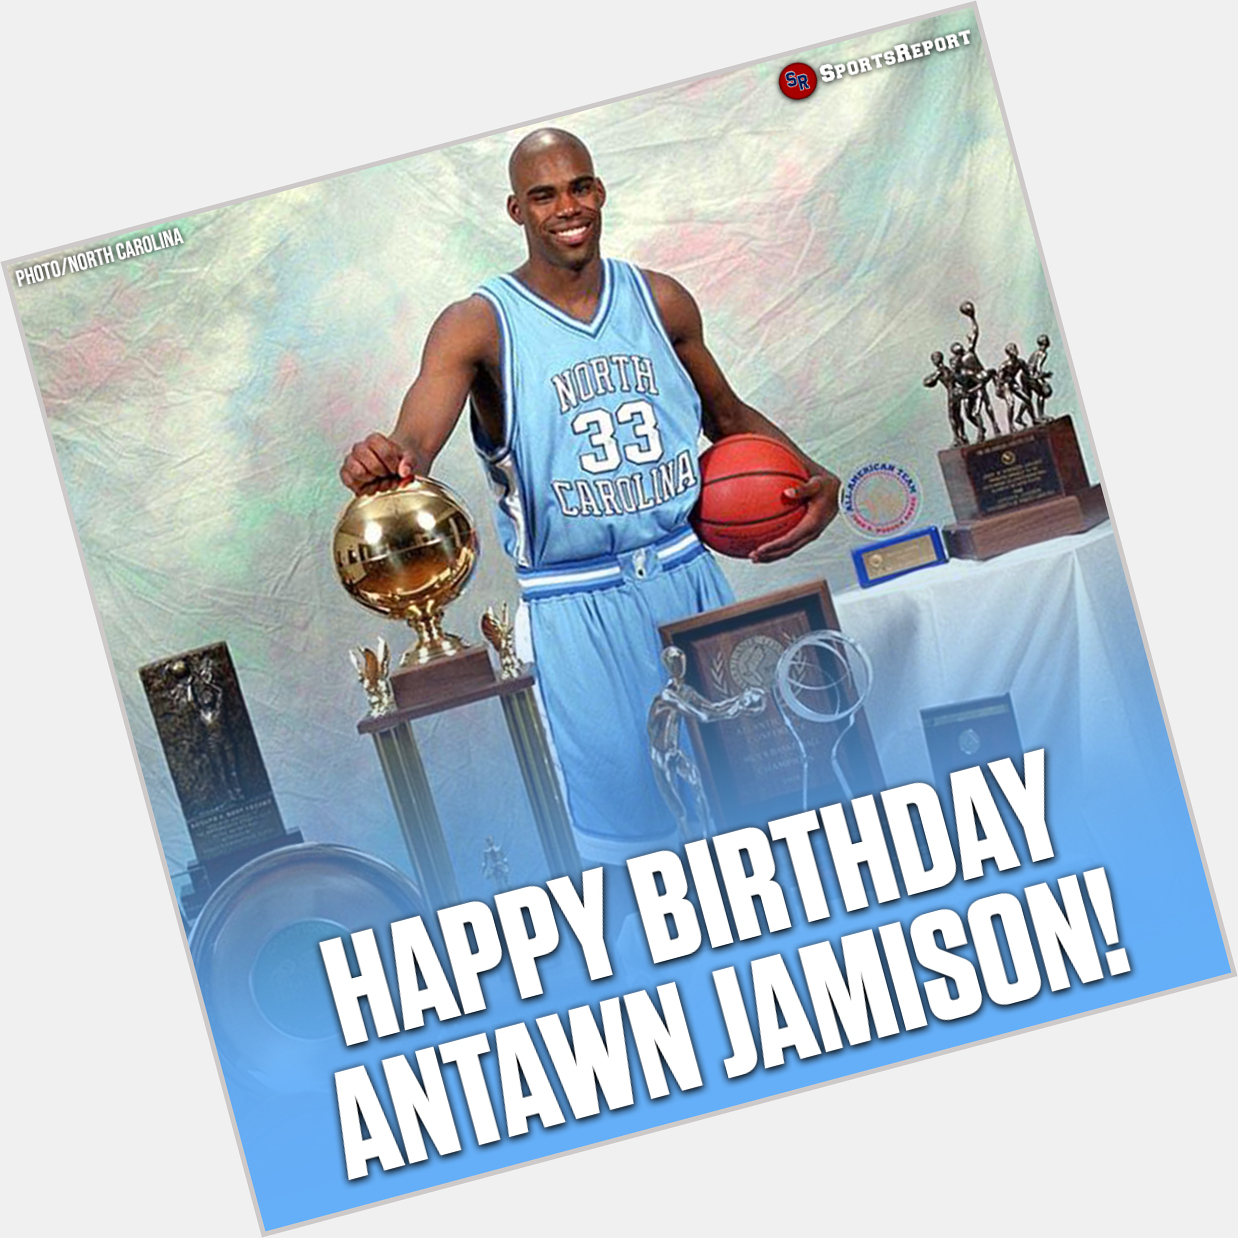  Fans, let\s wish Legend Antawn Jamison a Happy Birthday! 